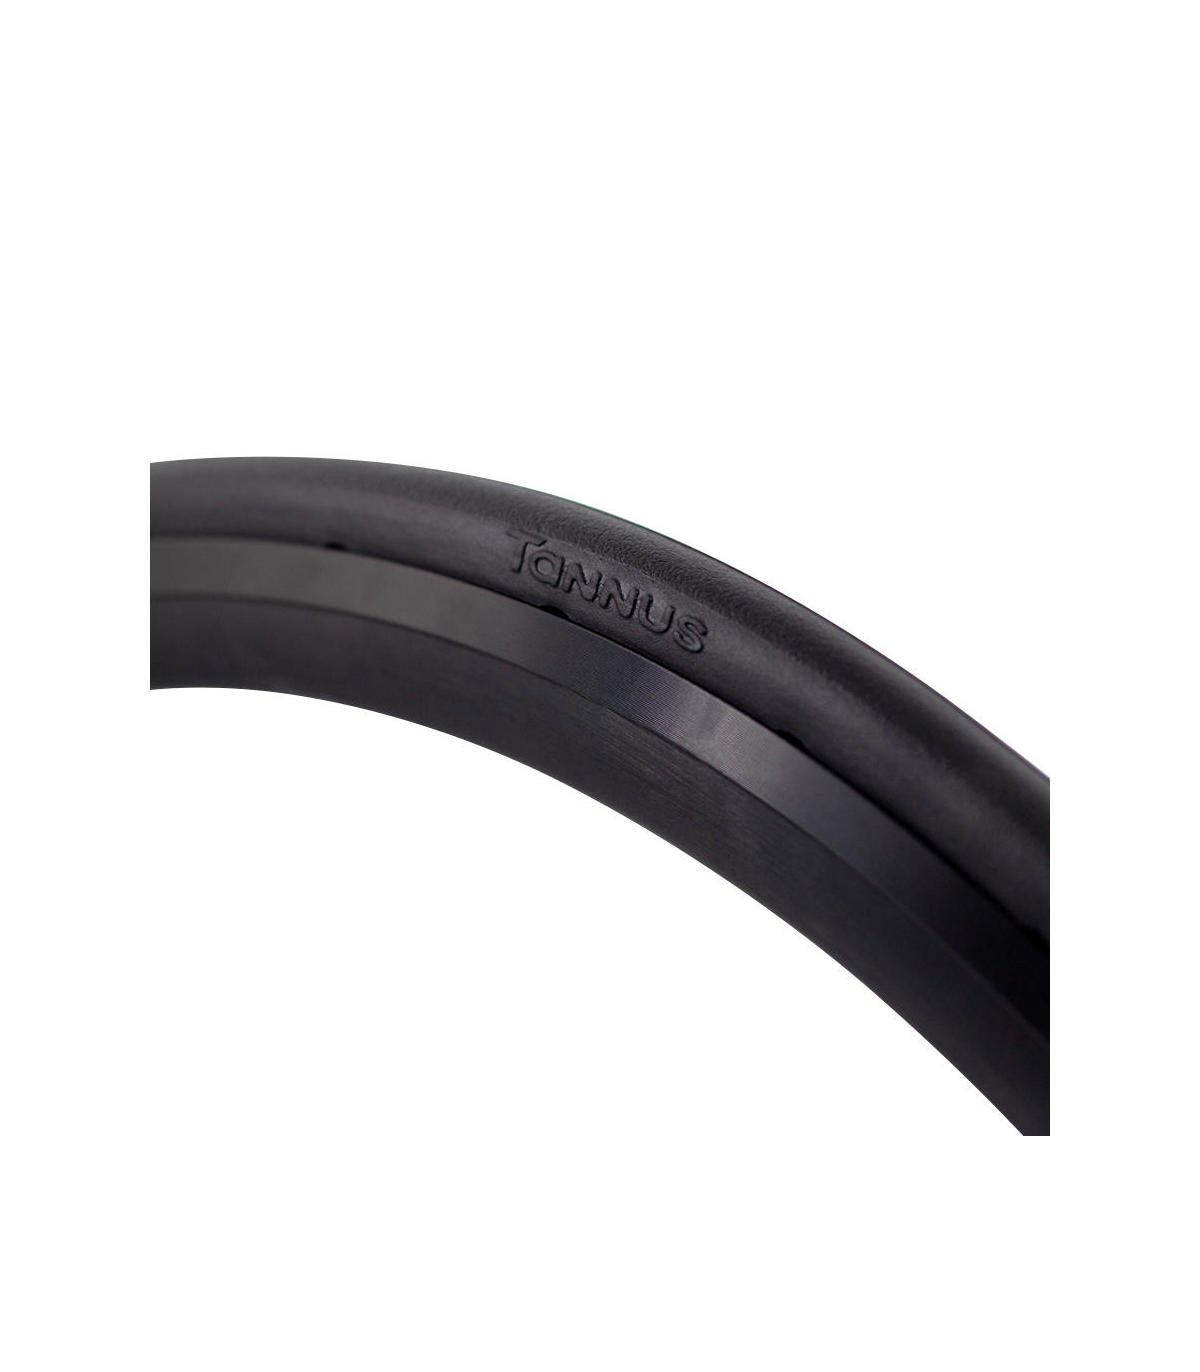 Cubierta Slick 700x23c Regular Tannus Airless Tire - negro - 